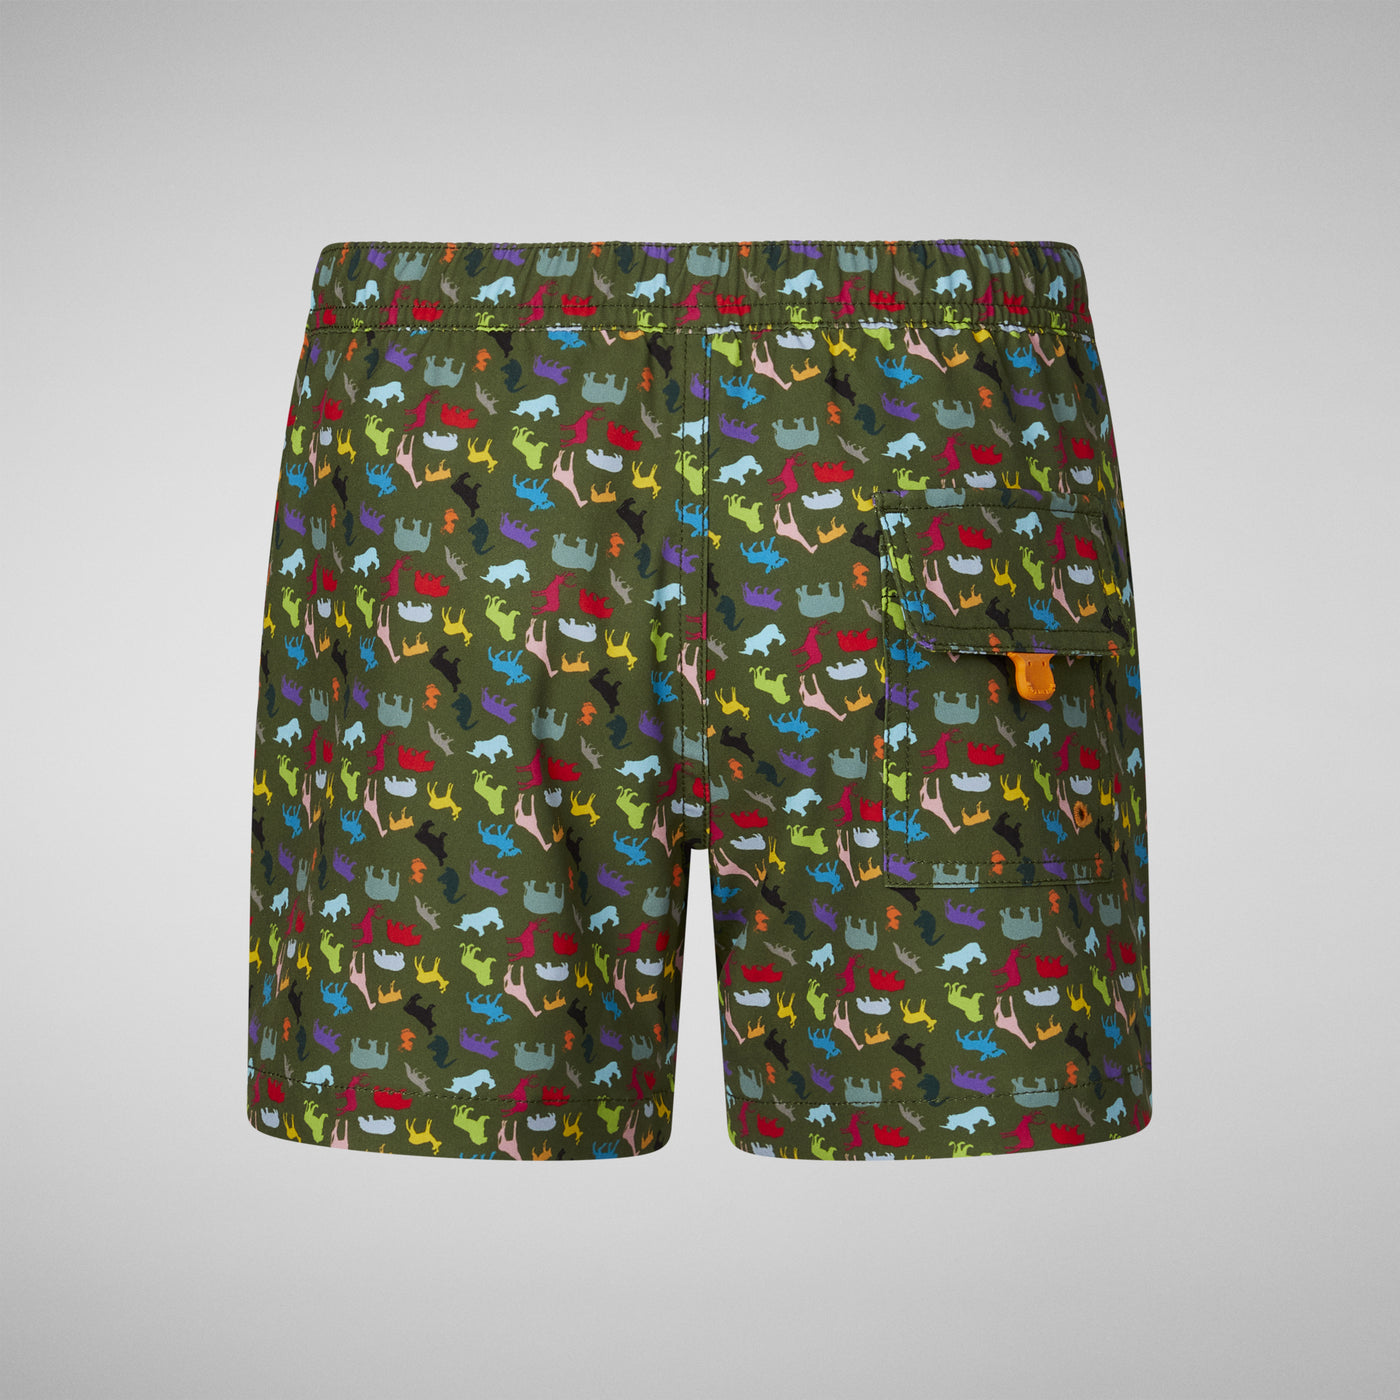 Product Back View of Boys' Getu Swim Trunks in Zoo Print